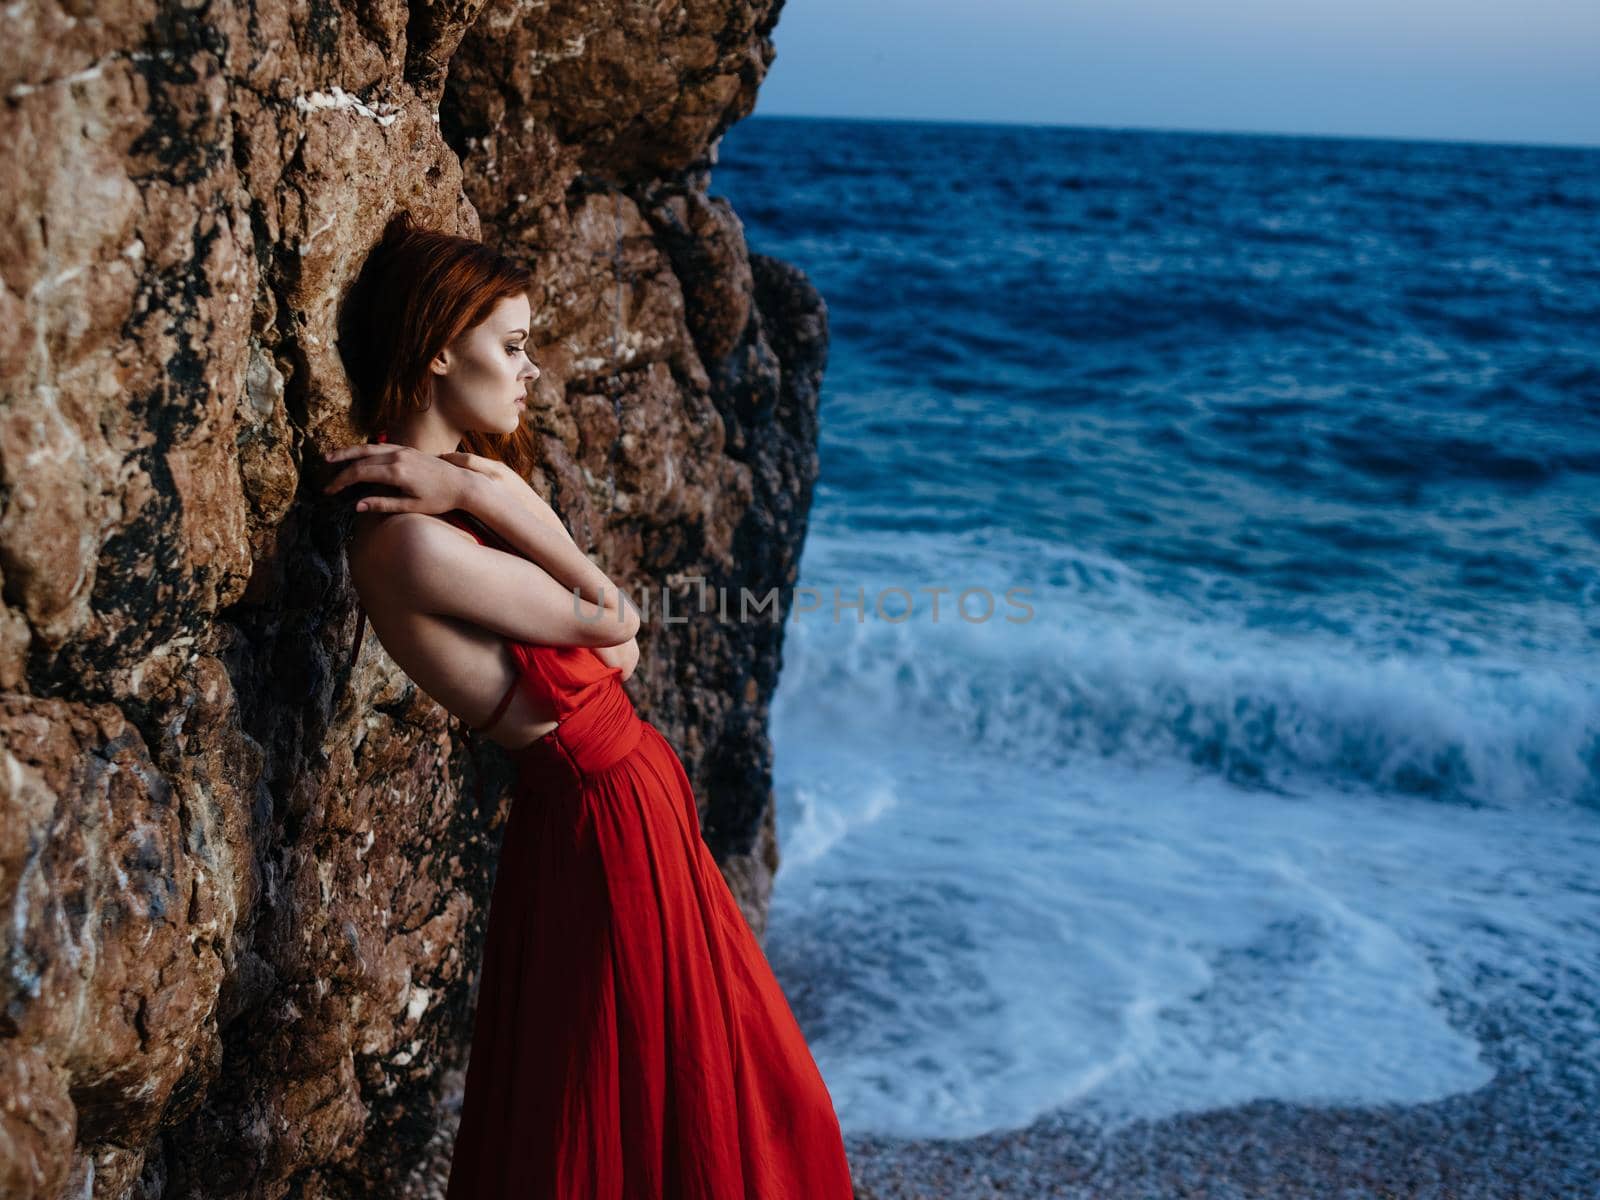 Woman in red dress rocky stone landscape ocean waves by SHOTPRIME